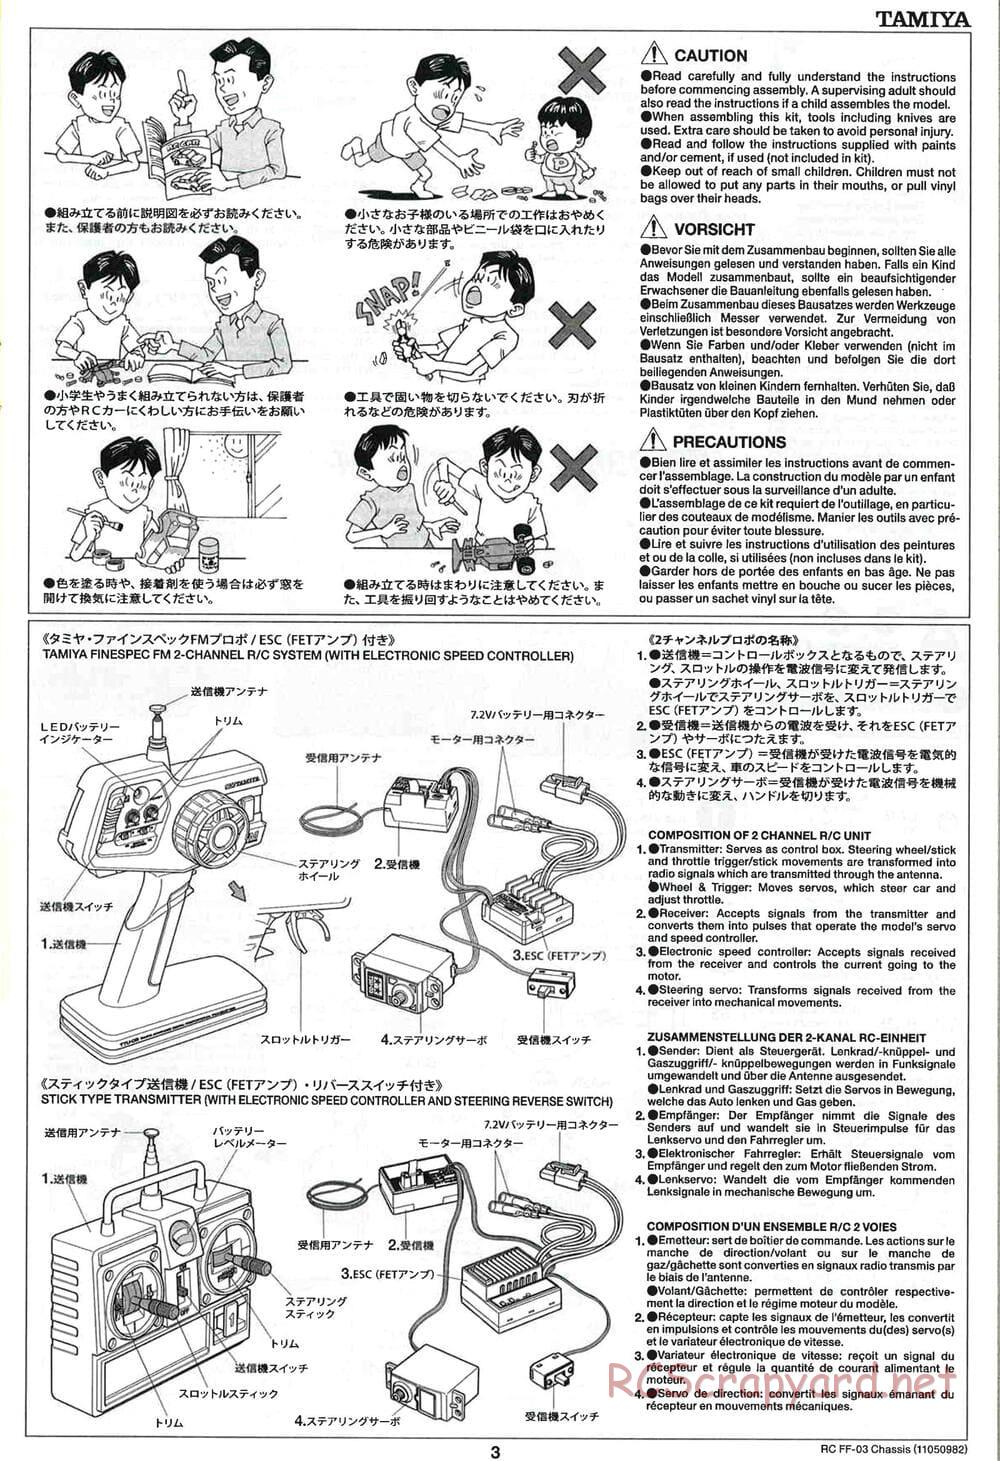 Tamiya - FF-03 Chassis - Manual - Page 3